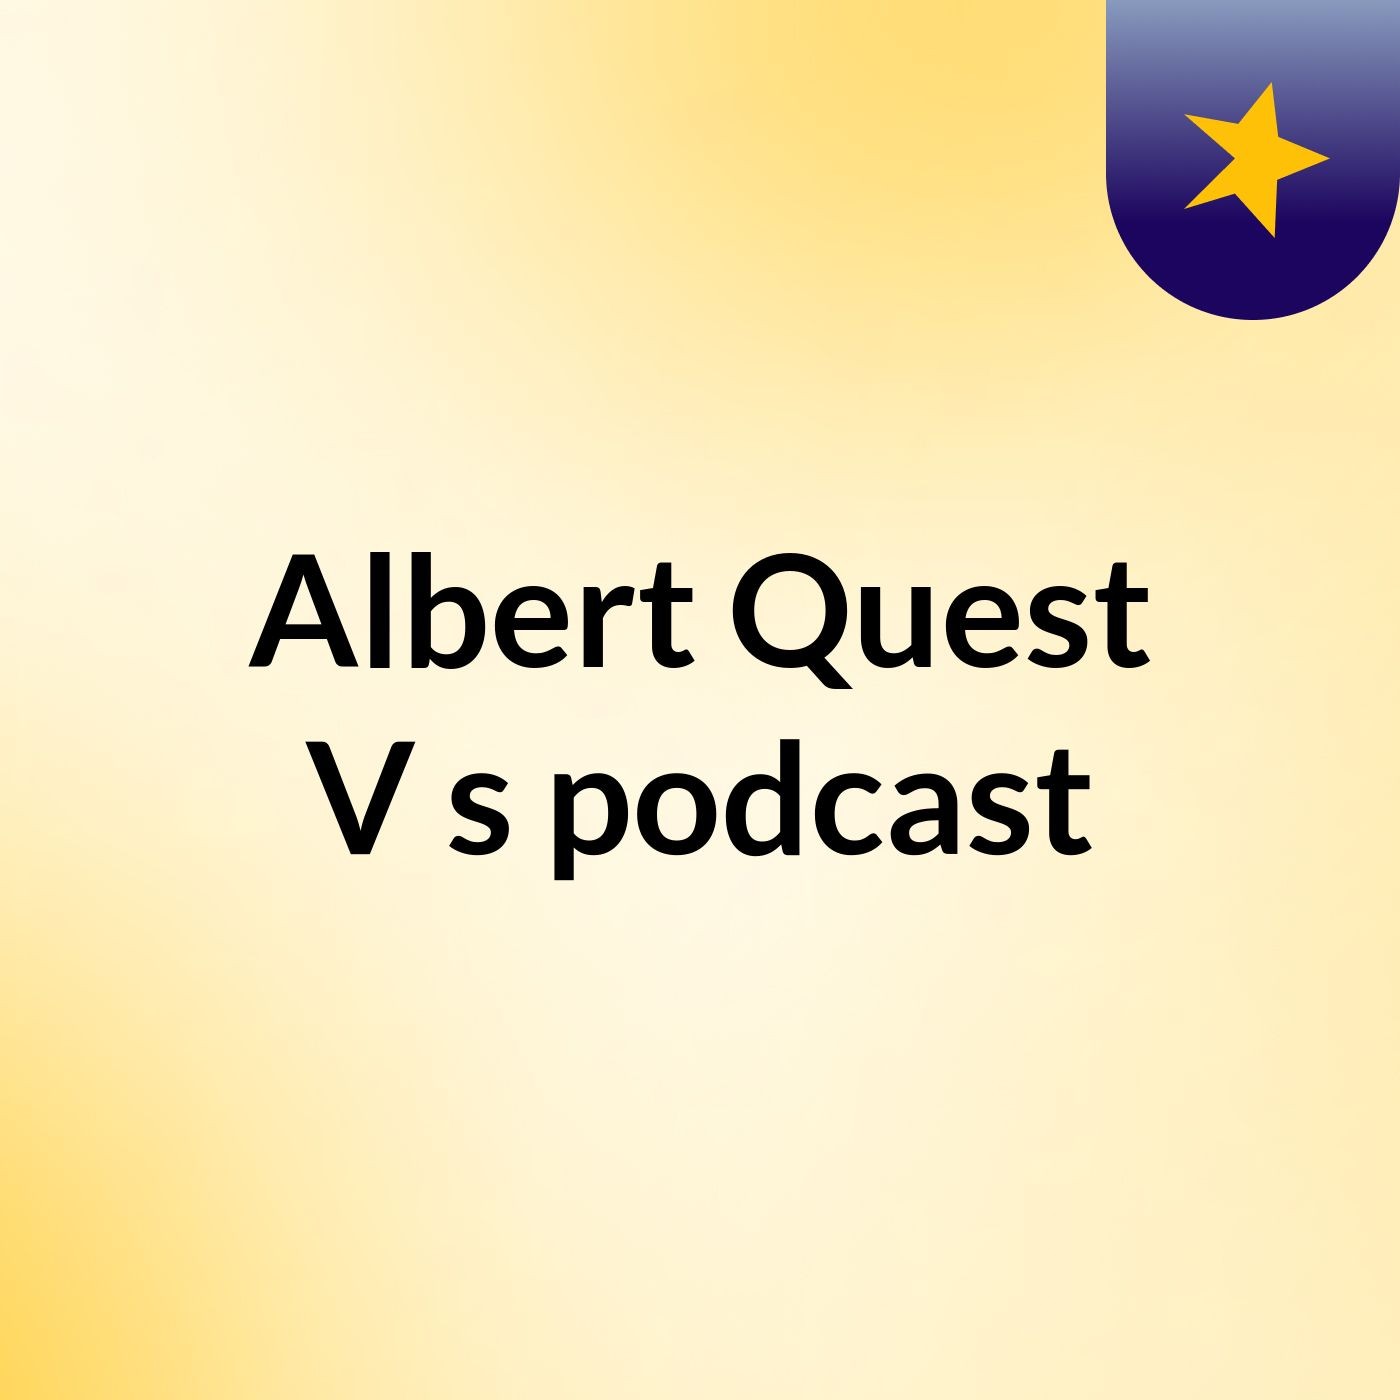 Episode 2 - Albert Quest V's podcast